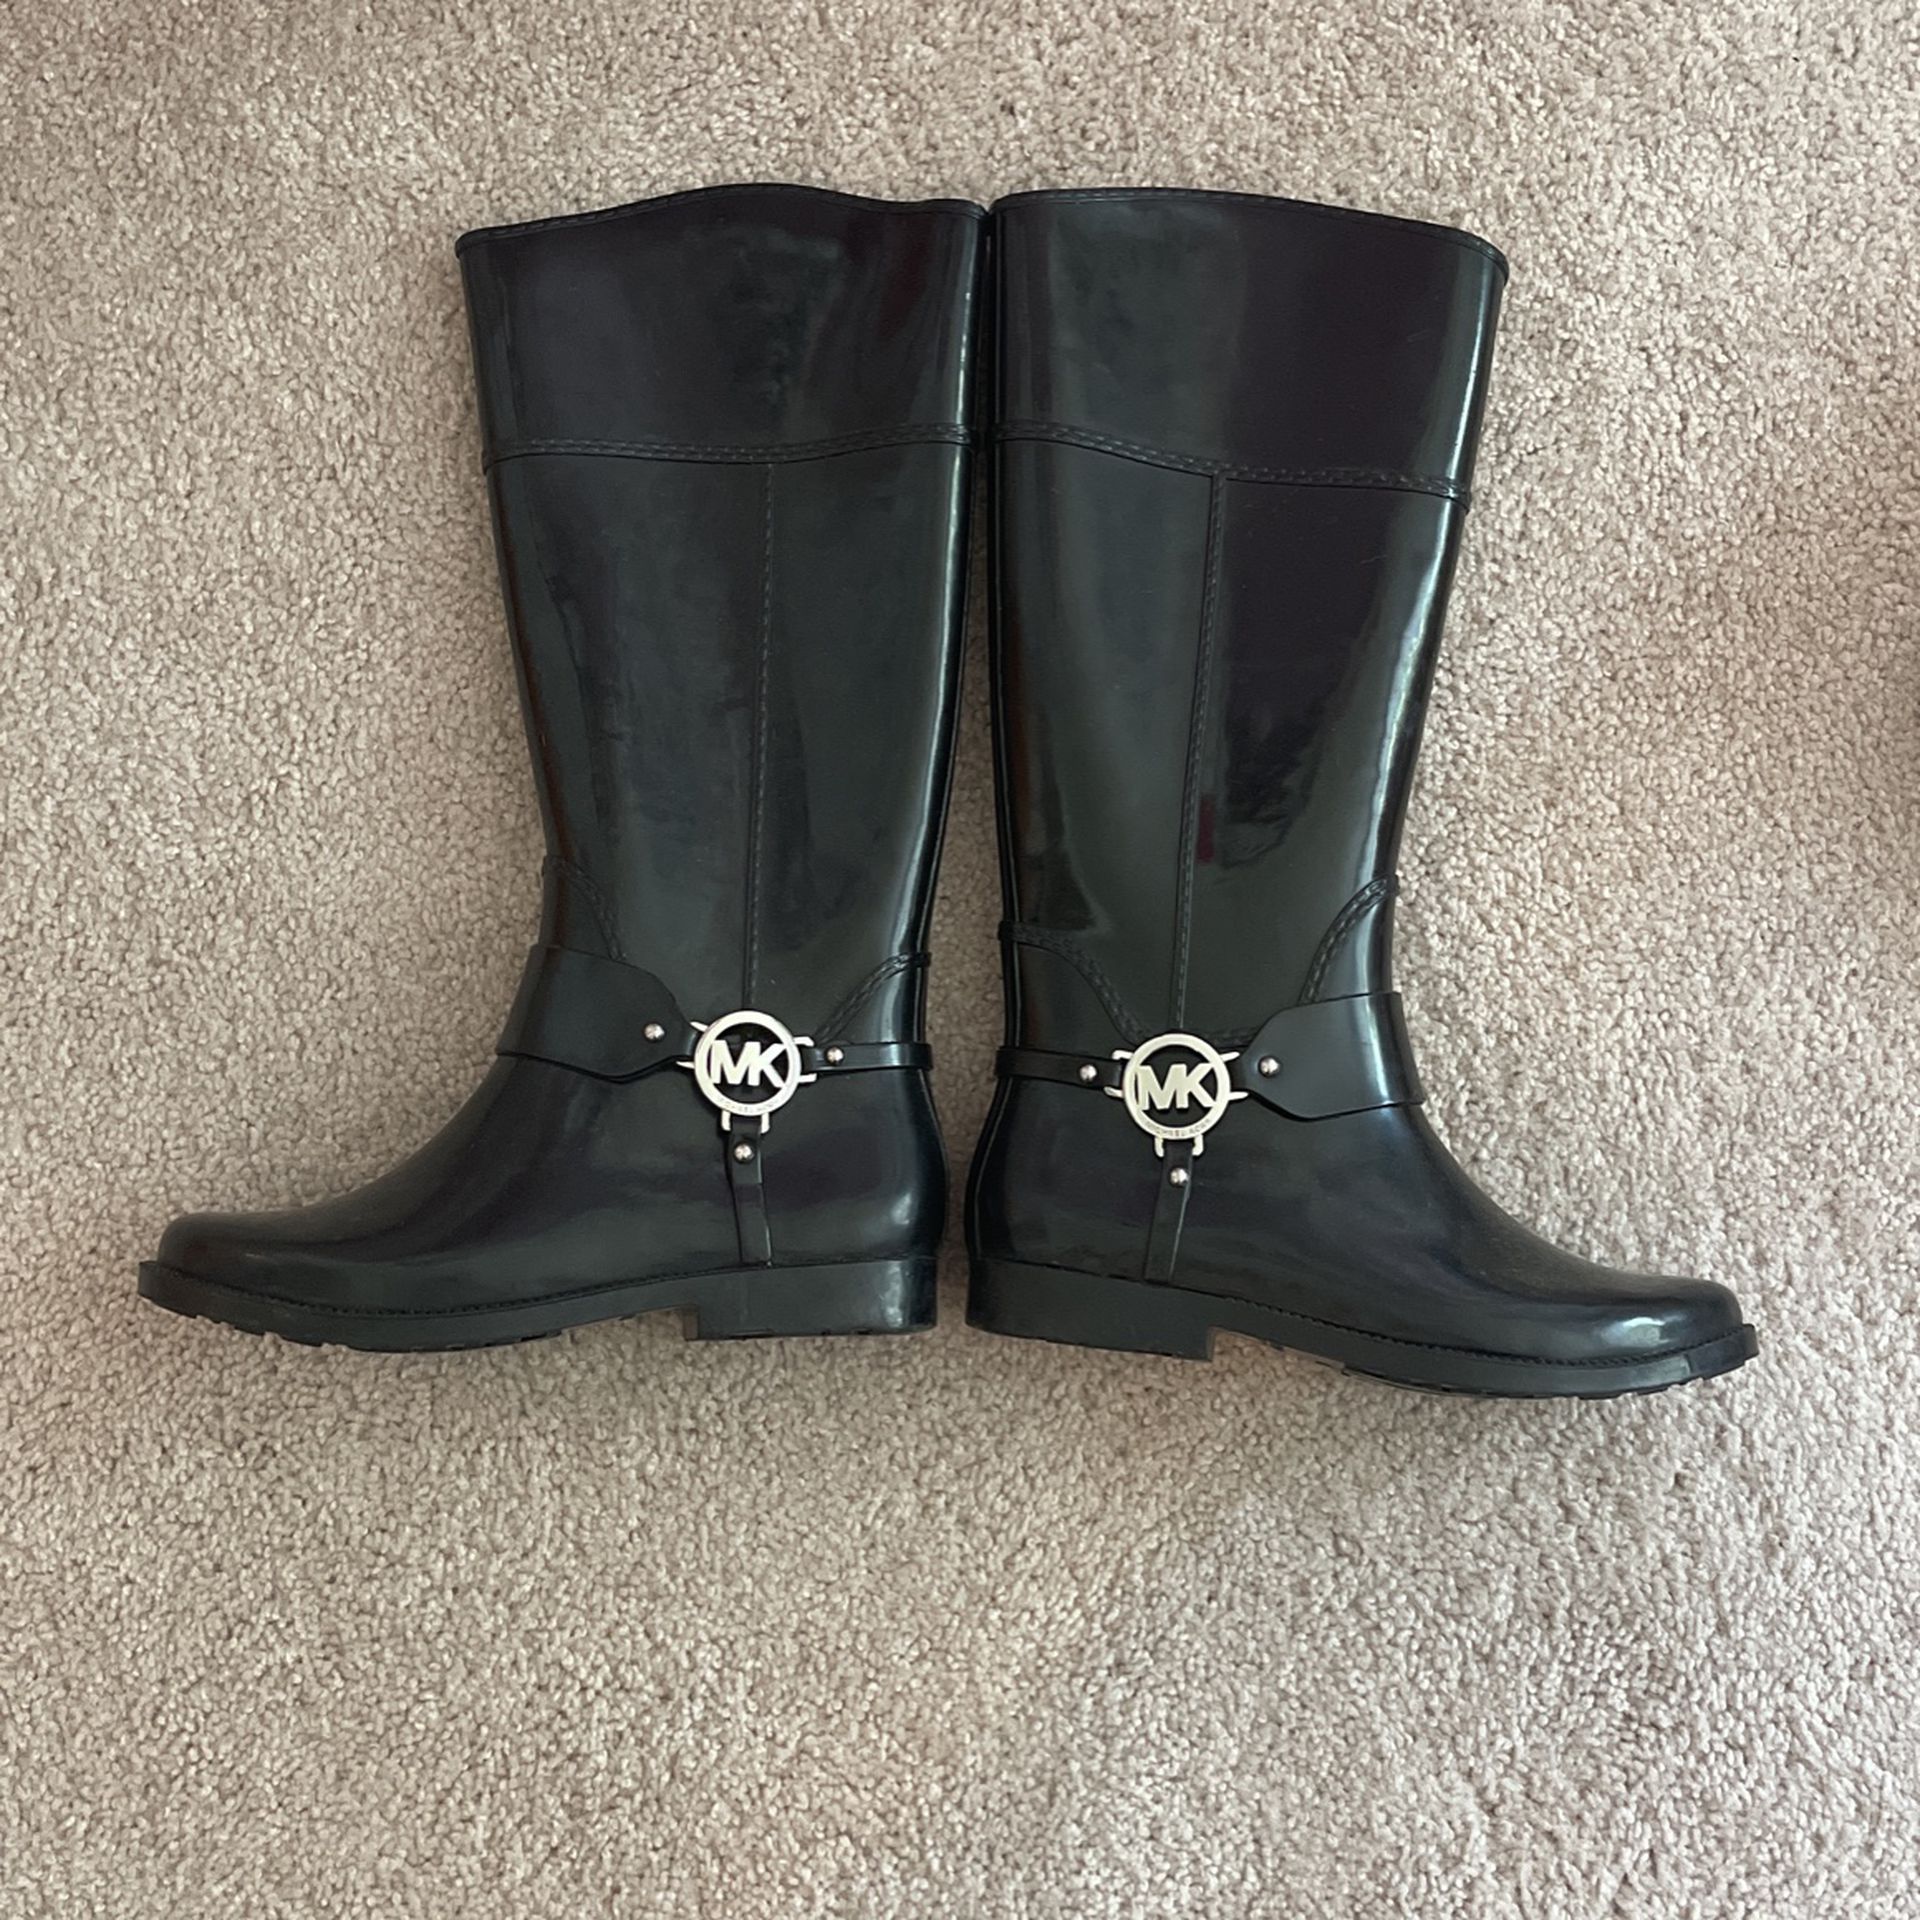 Michael Kors Tall Rain Boots-Great Condition